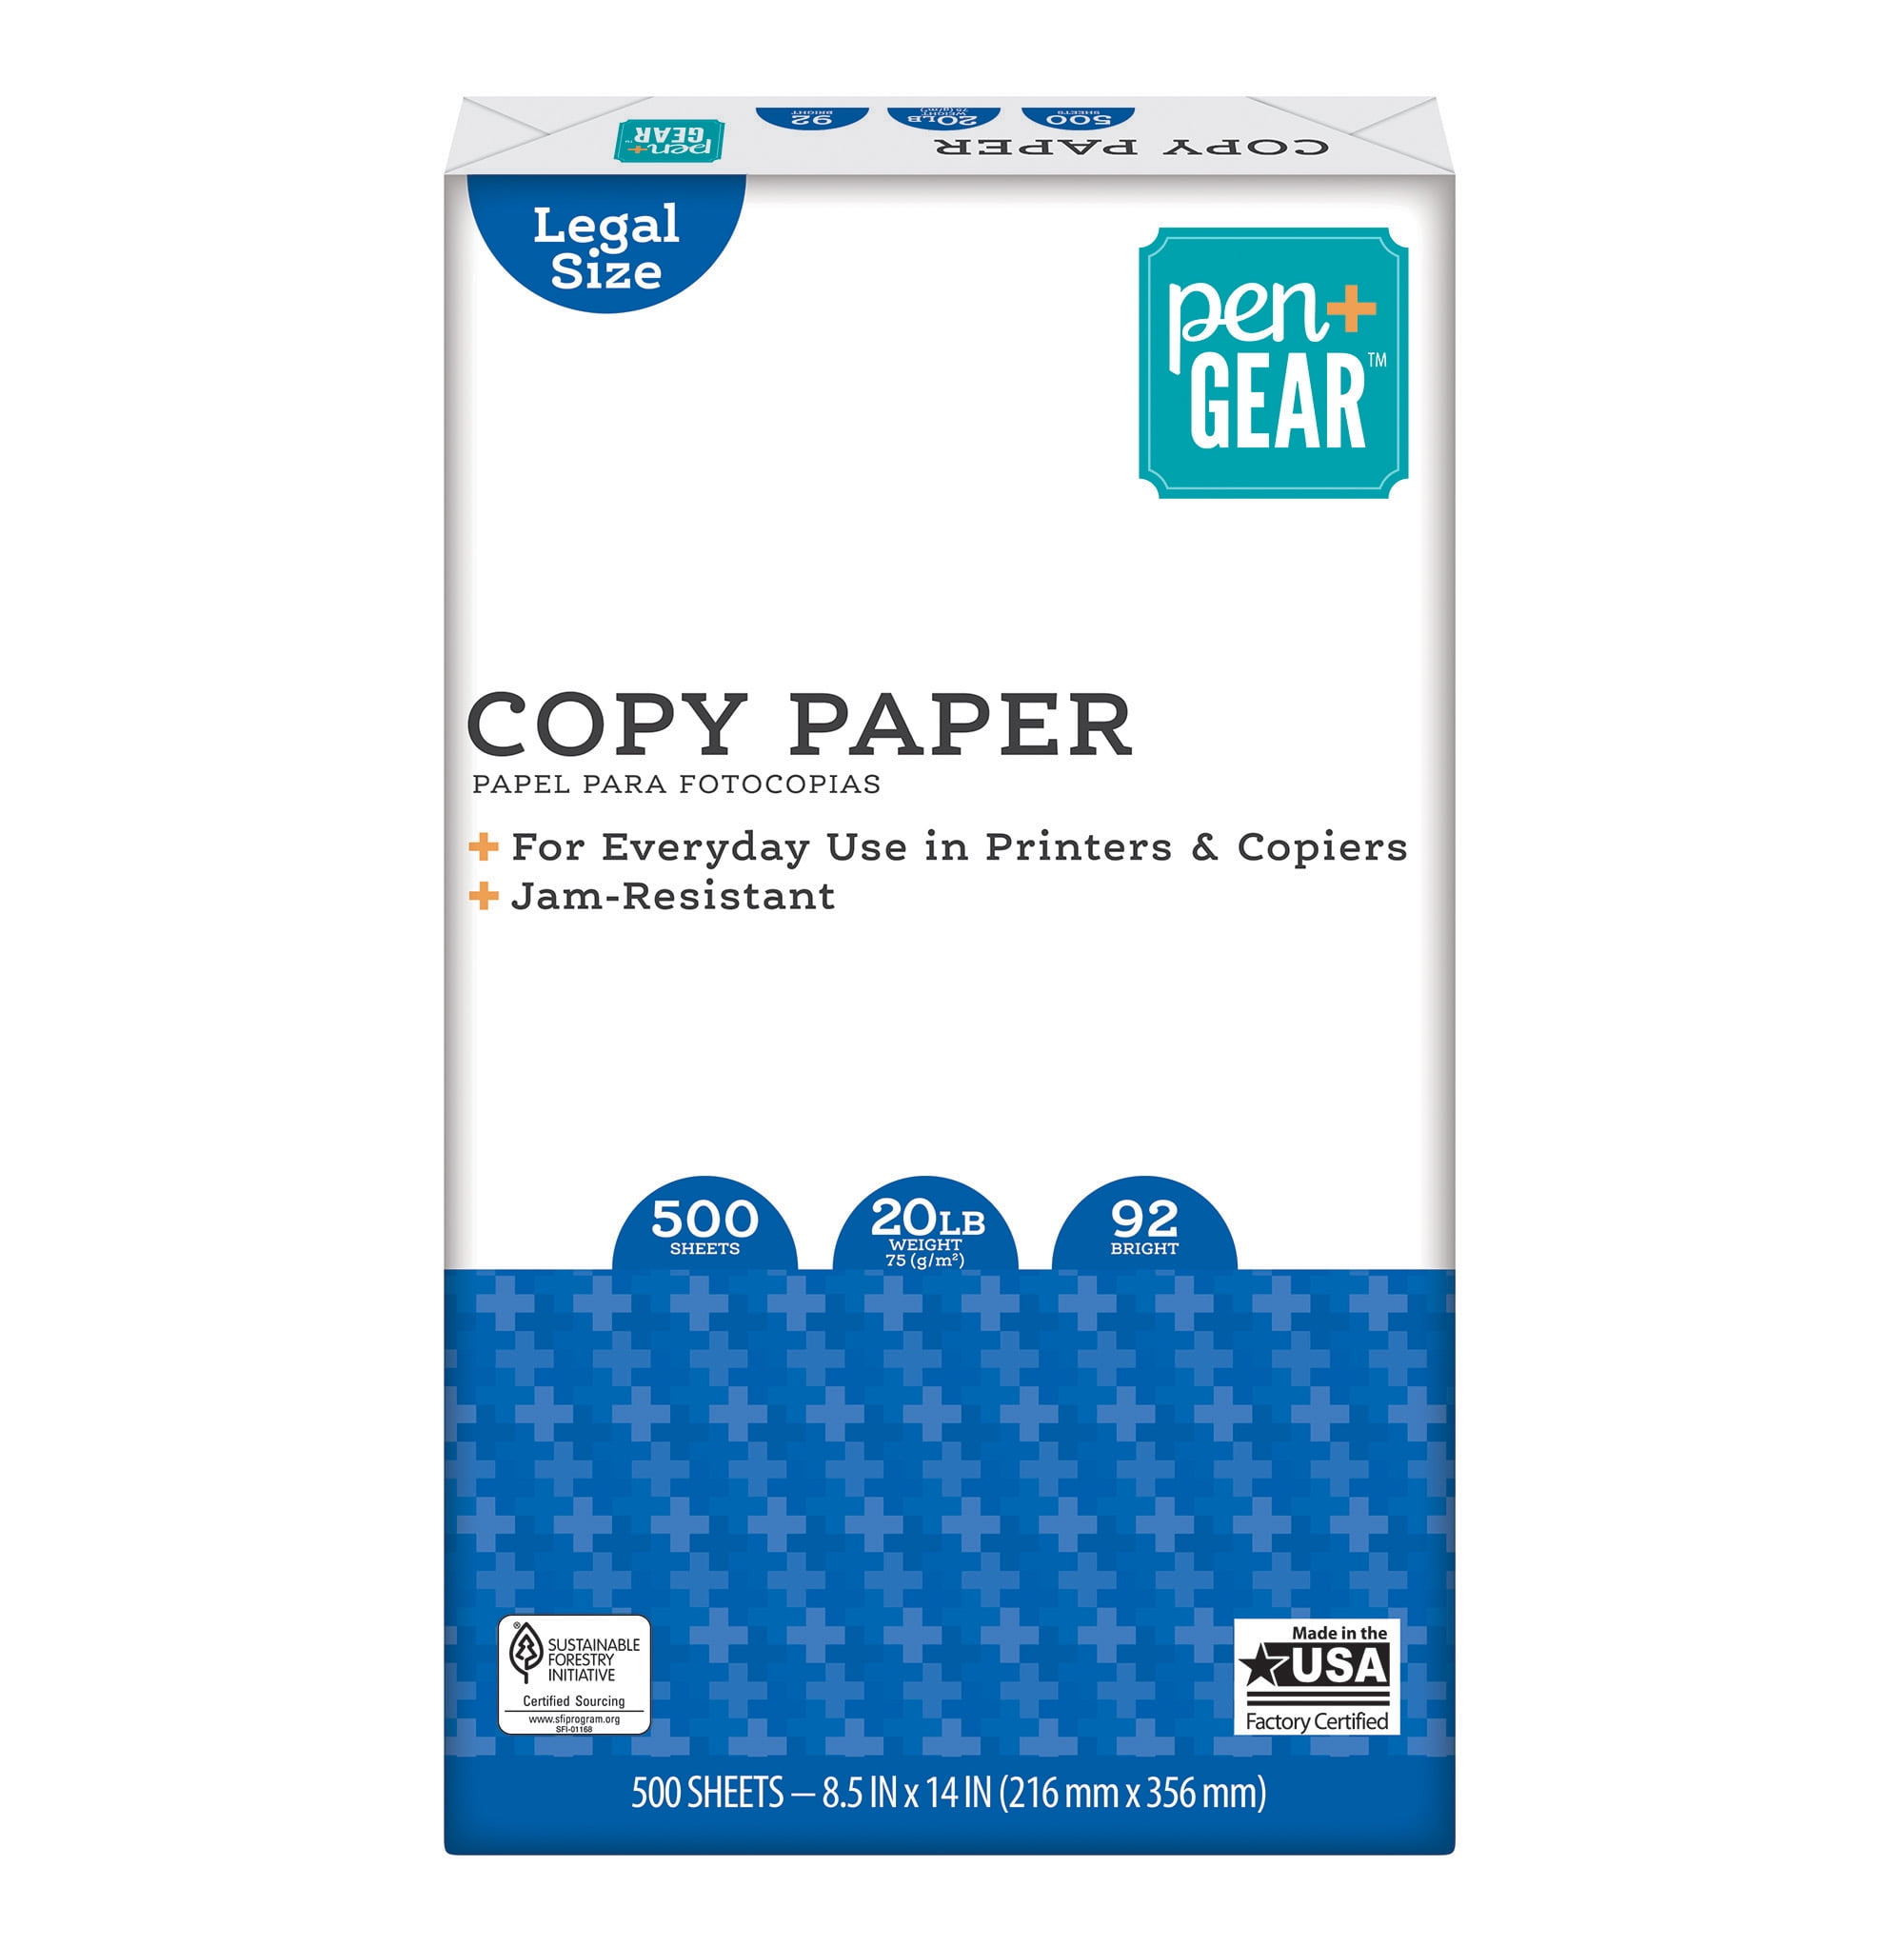 Pen+Gear Copy Paper, 8.5 x 11, 92 Bright White, 20 lb., 10 Ream Case  (5,000 Sheets)